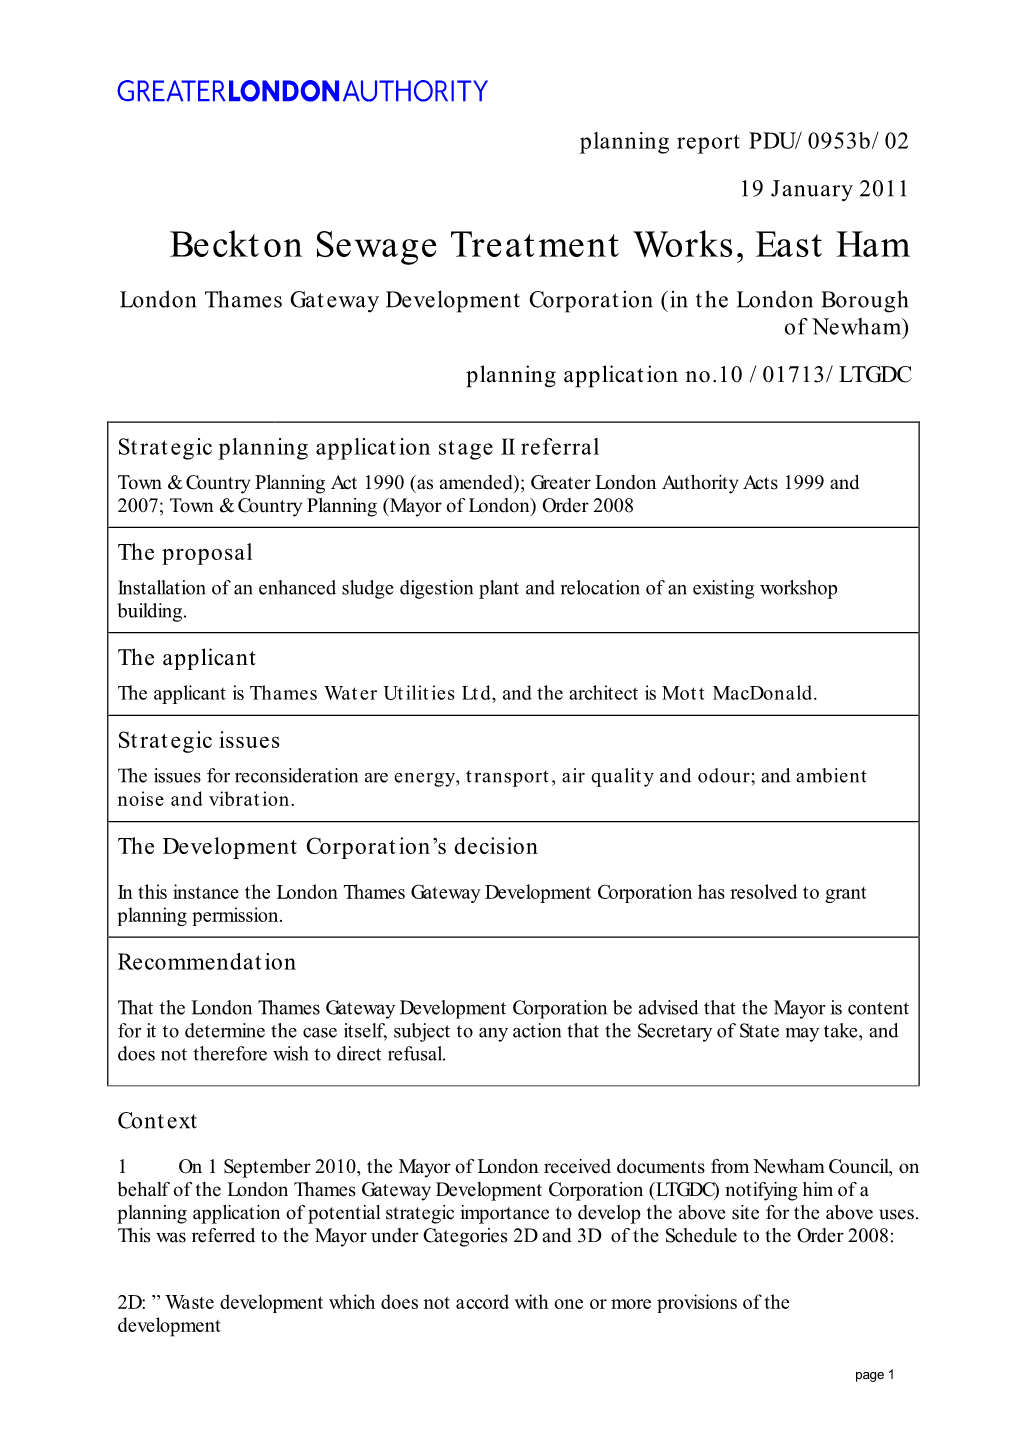 Beckton Sewage Treatment Works, East Ham